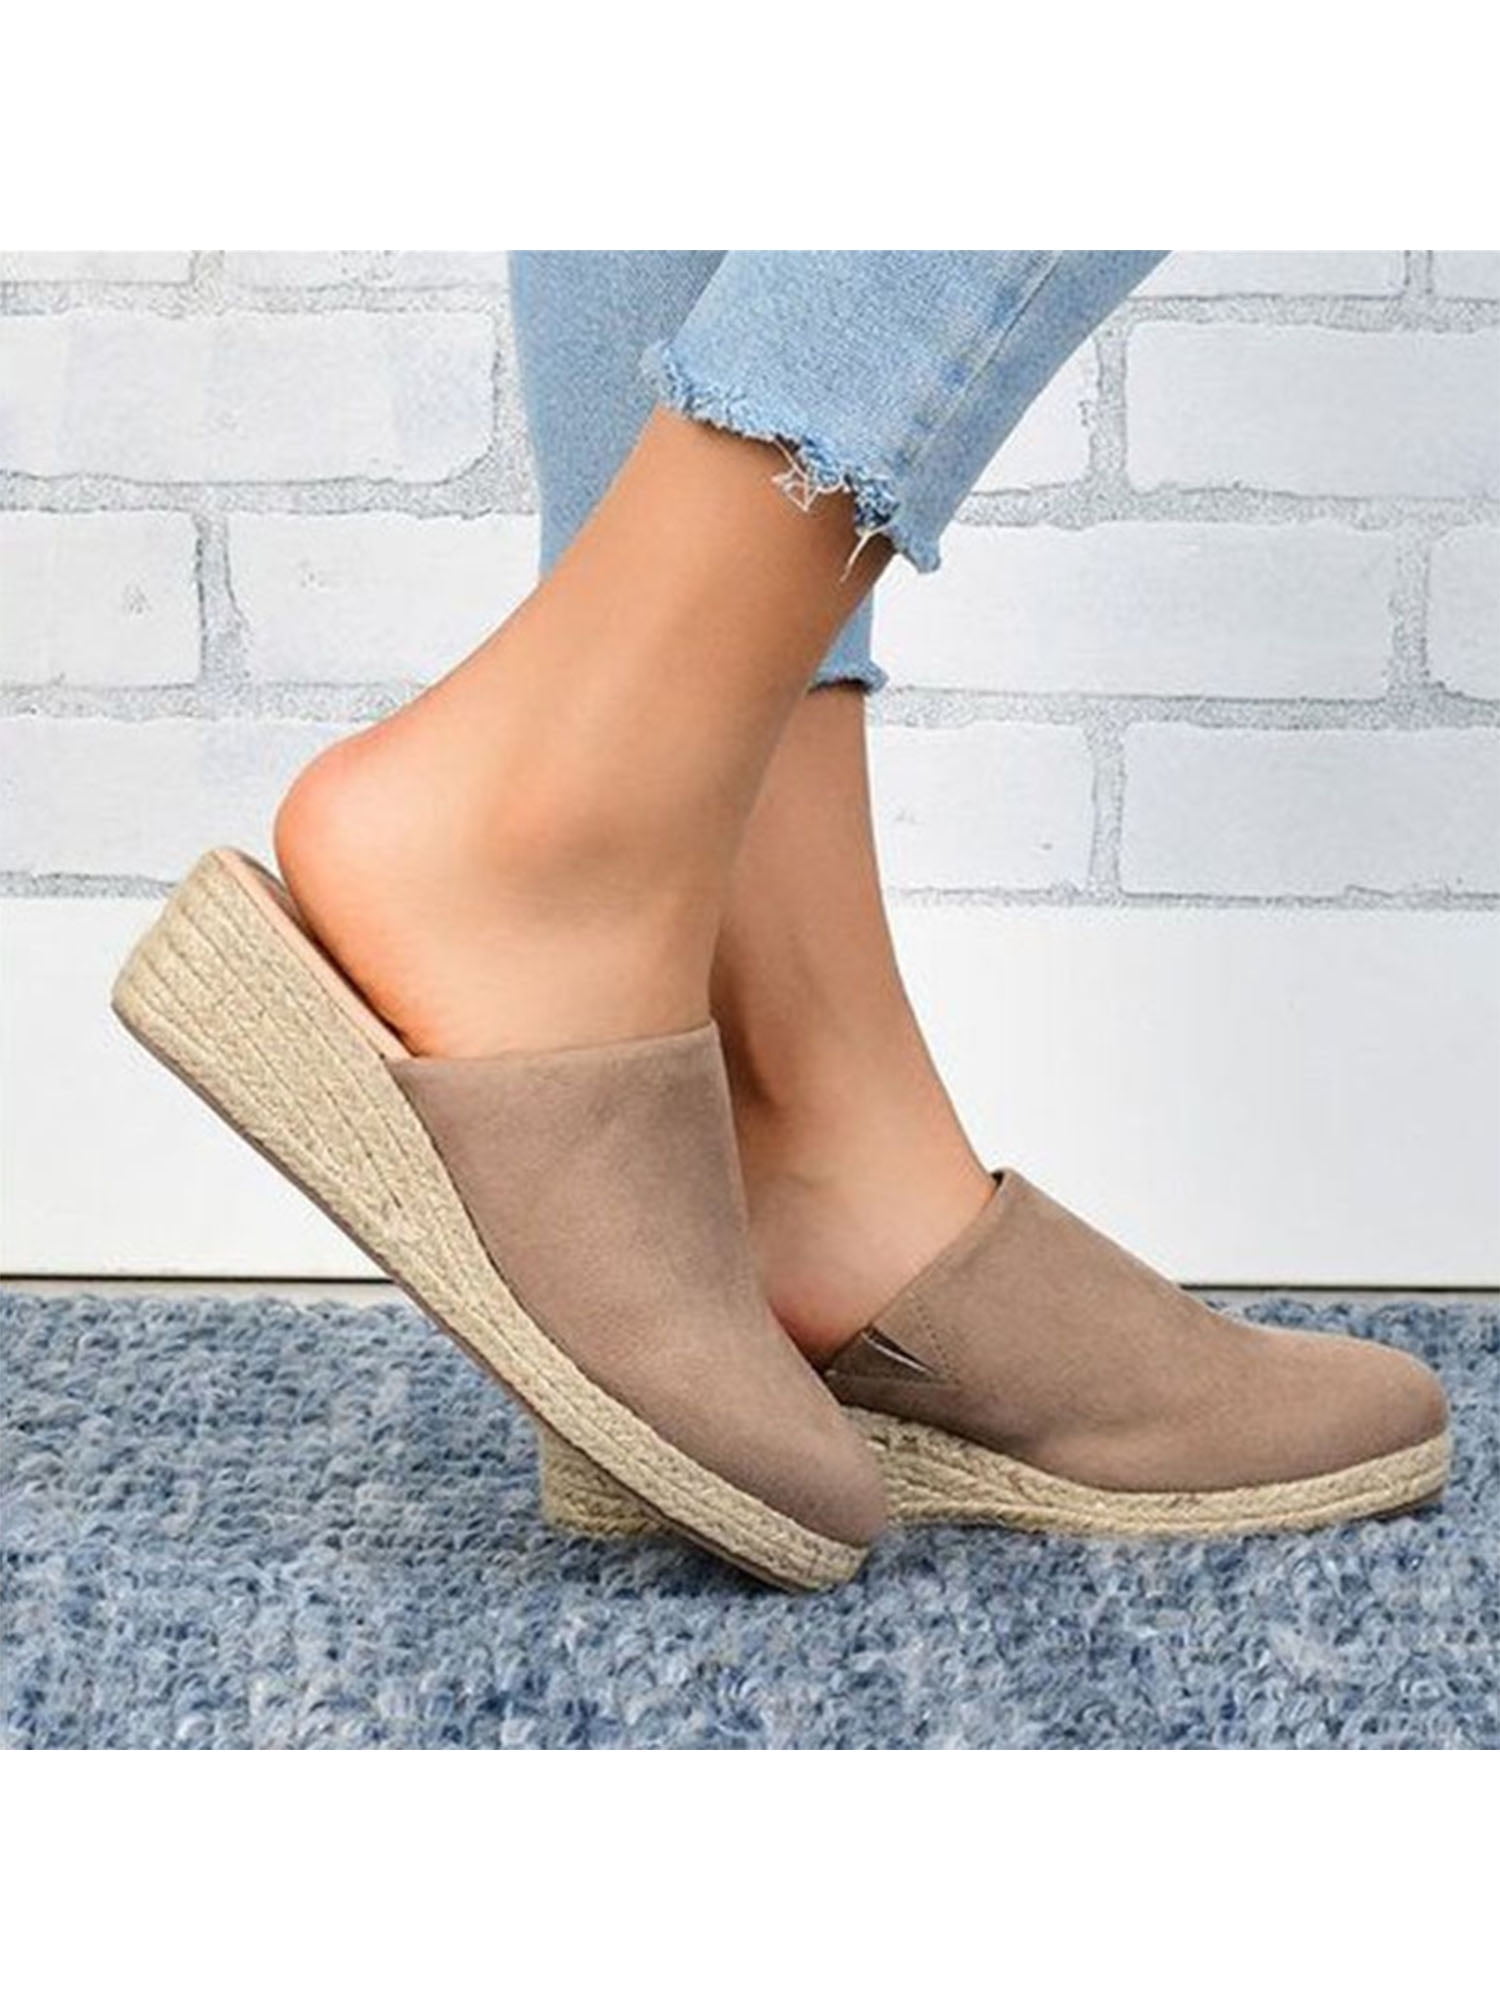 Colisha Womens Espadrilles Wedges Mule Shoes Platform Closed Toe Slip on Slides Sandals - Walmart.com